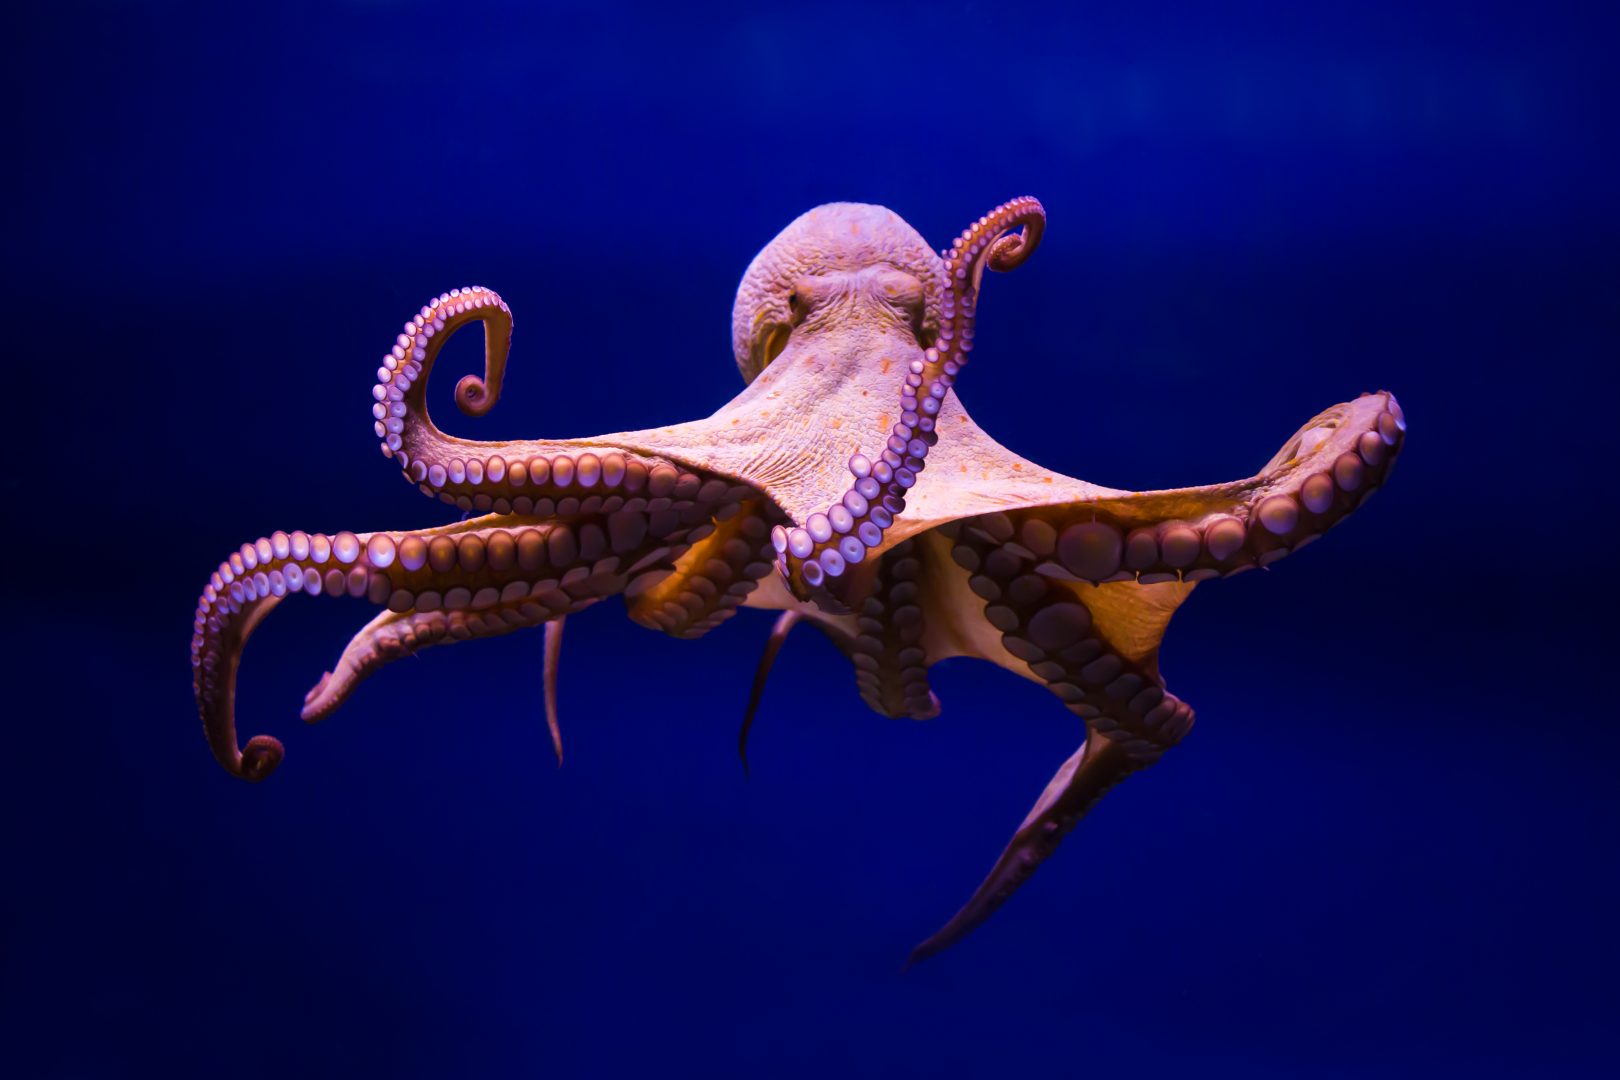 NATURE - Octopus: Making Contact